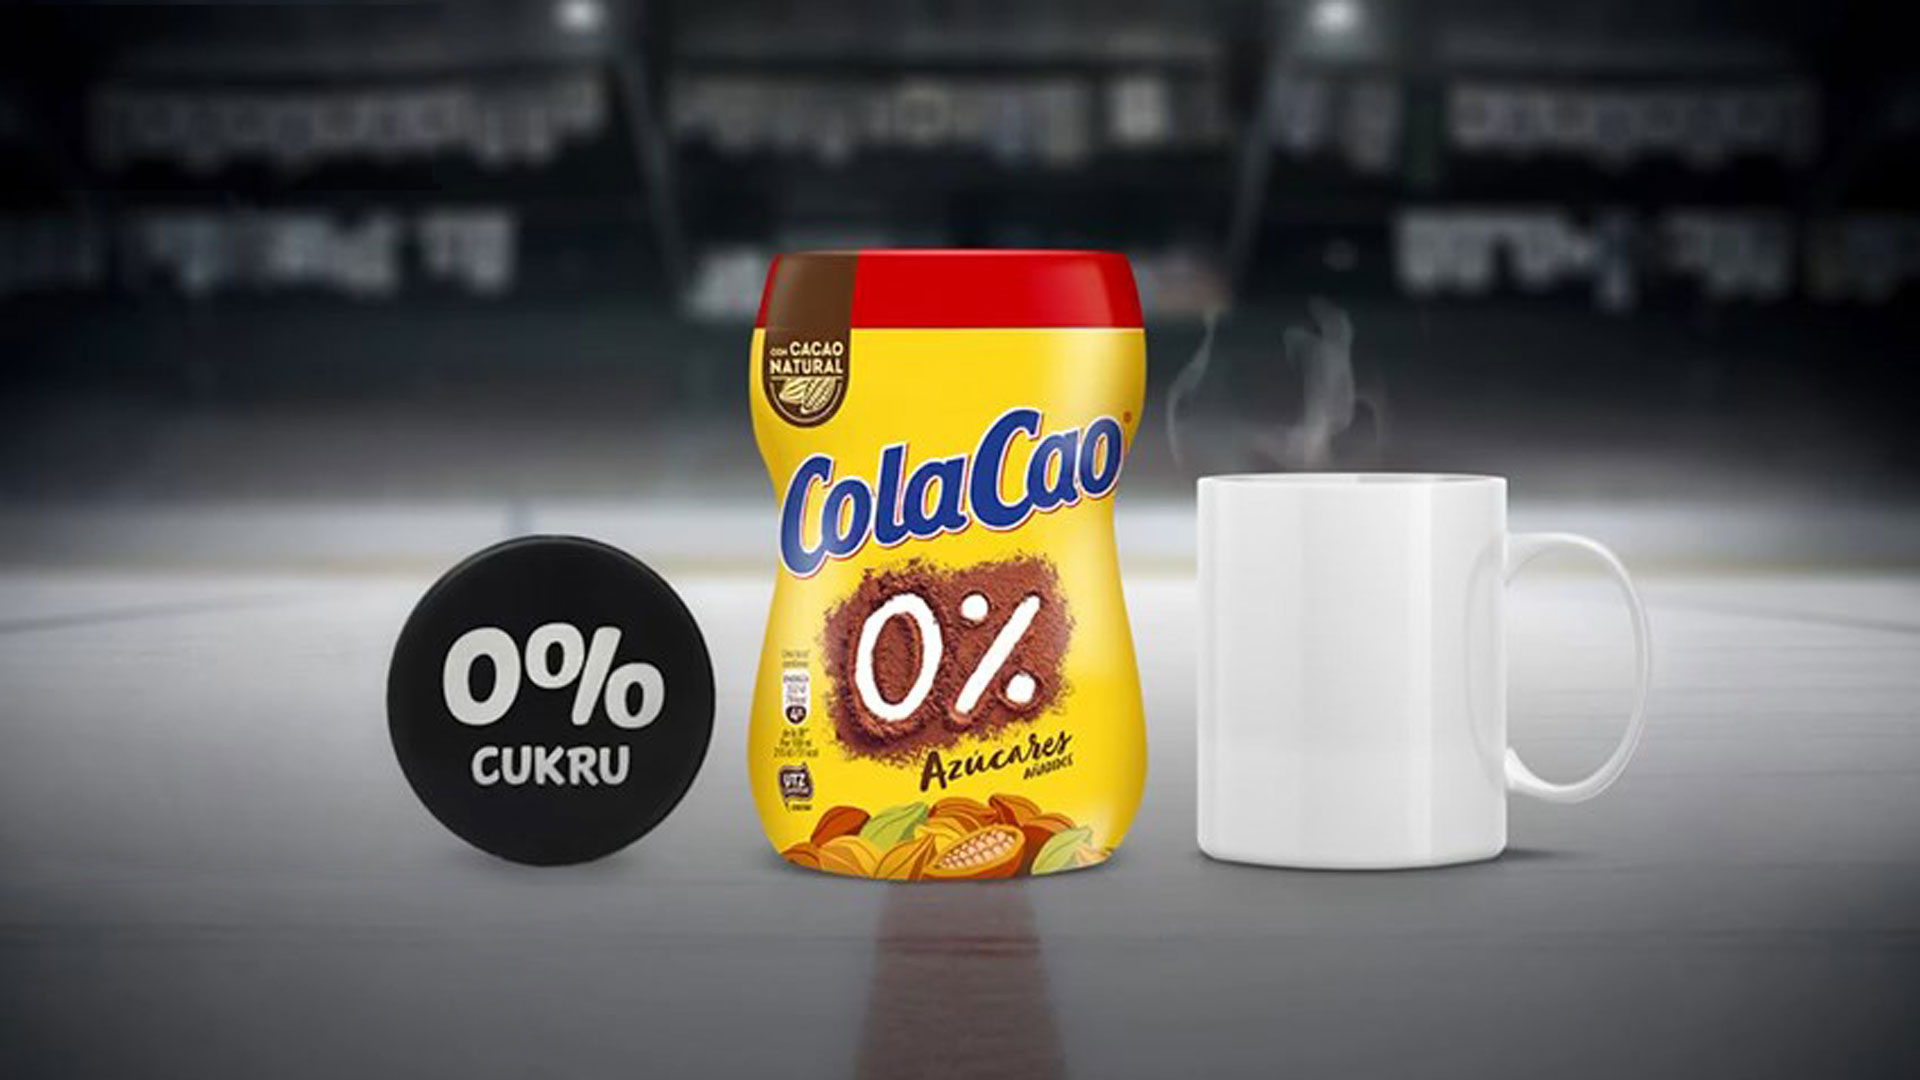 ColaCao - TV sponsorship message